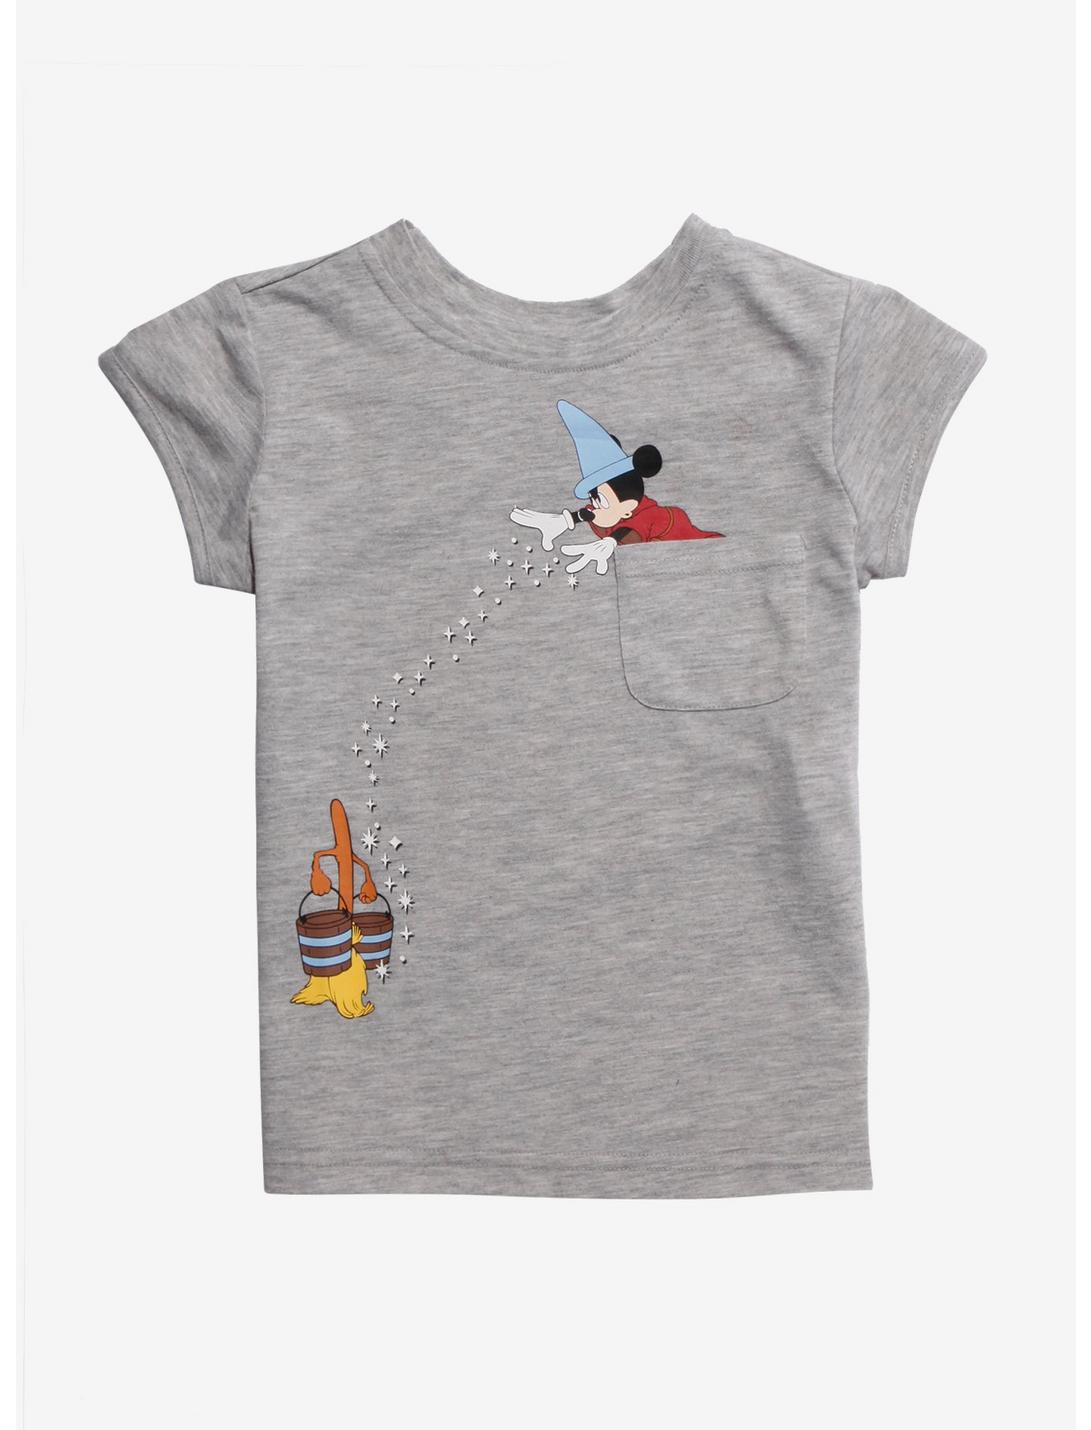 Disney Fantasia Mickey Mouse & Broom Toddler T-Shirt, GREY, hi-res